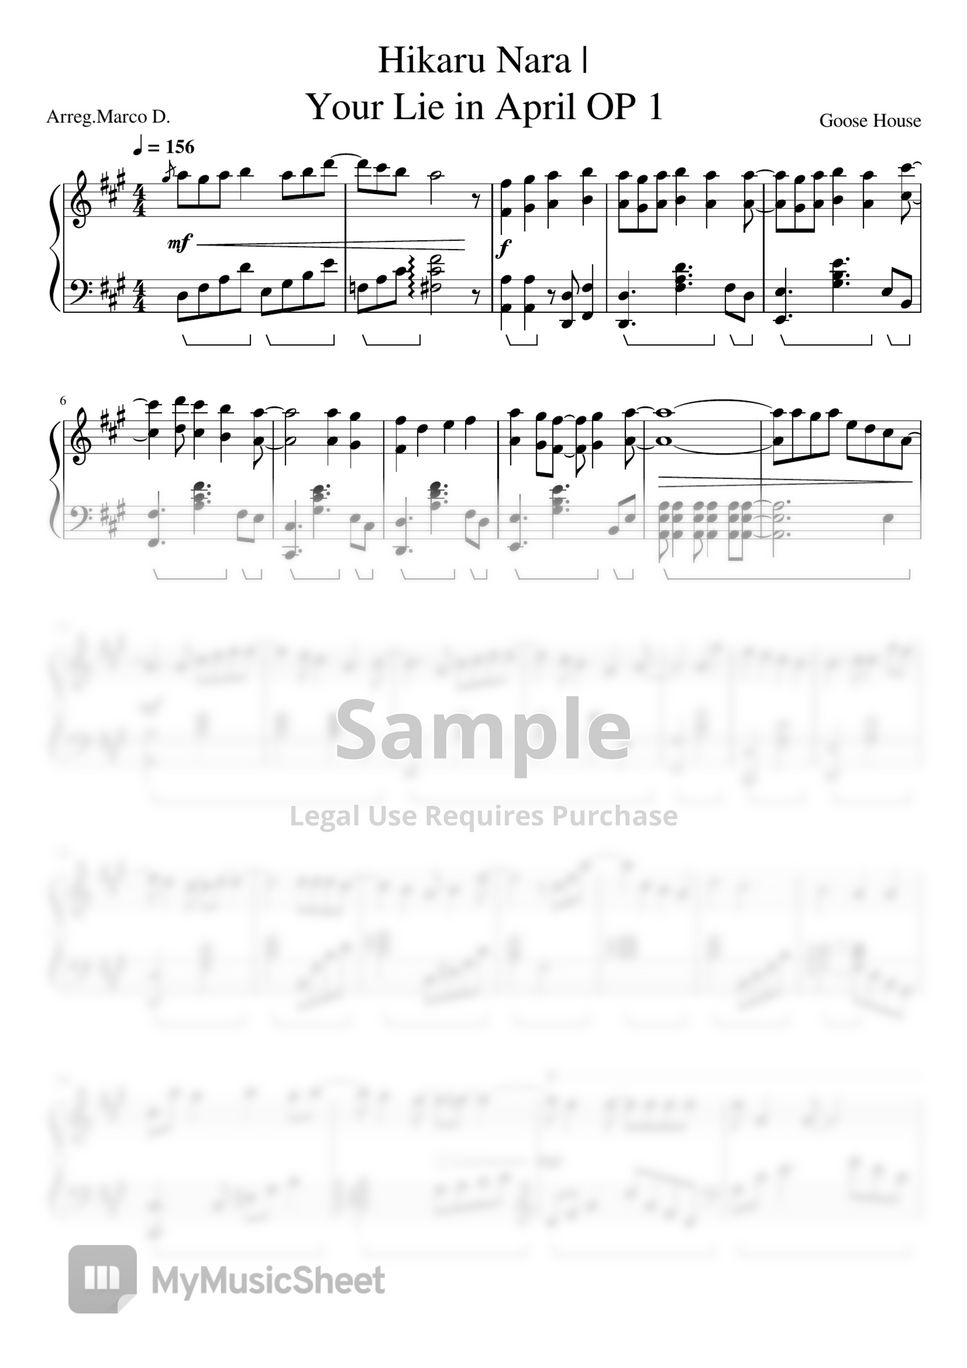 Hikaru Nara - Piano - Digital Sheet Music